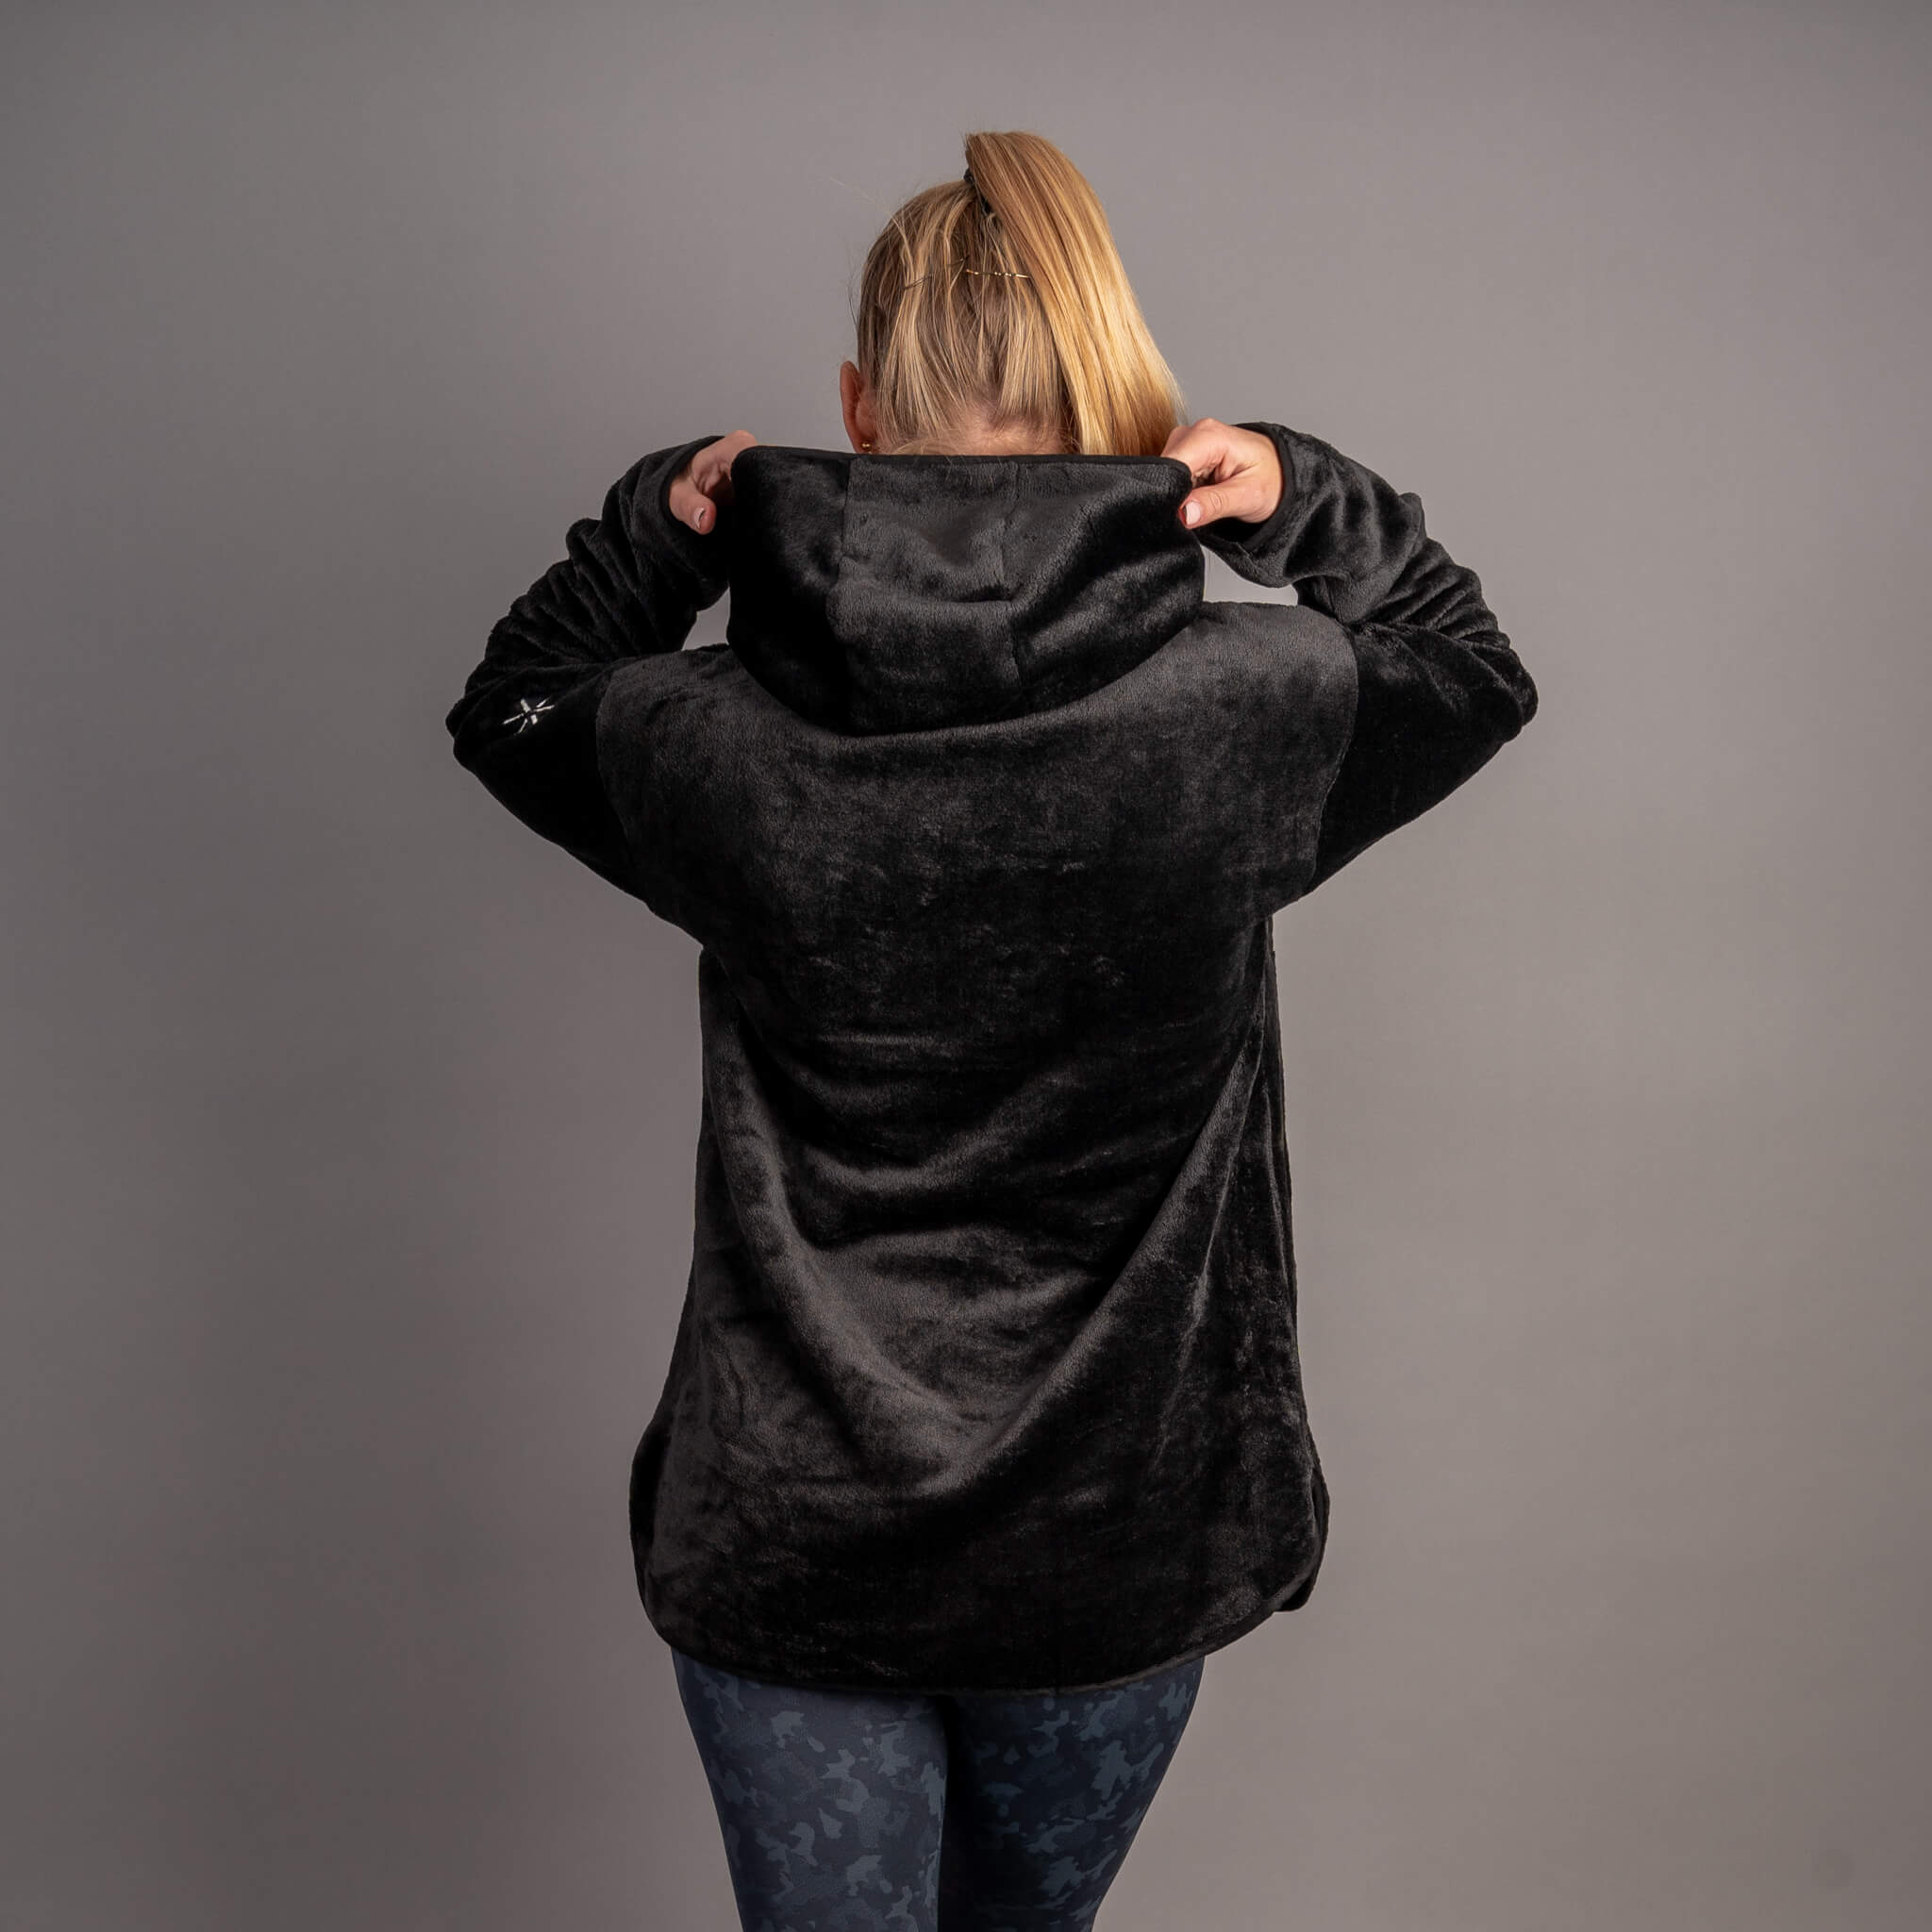 Zelos Activewear Pullover Sweatshirt Womens XL Black Lounge Leisure Long  Sleeve